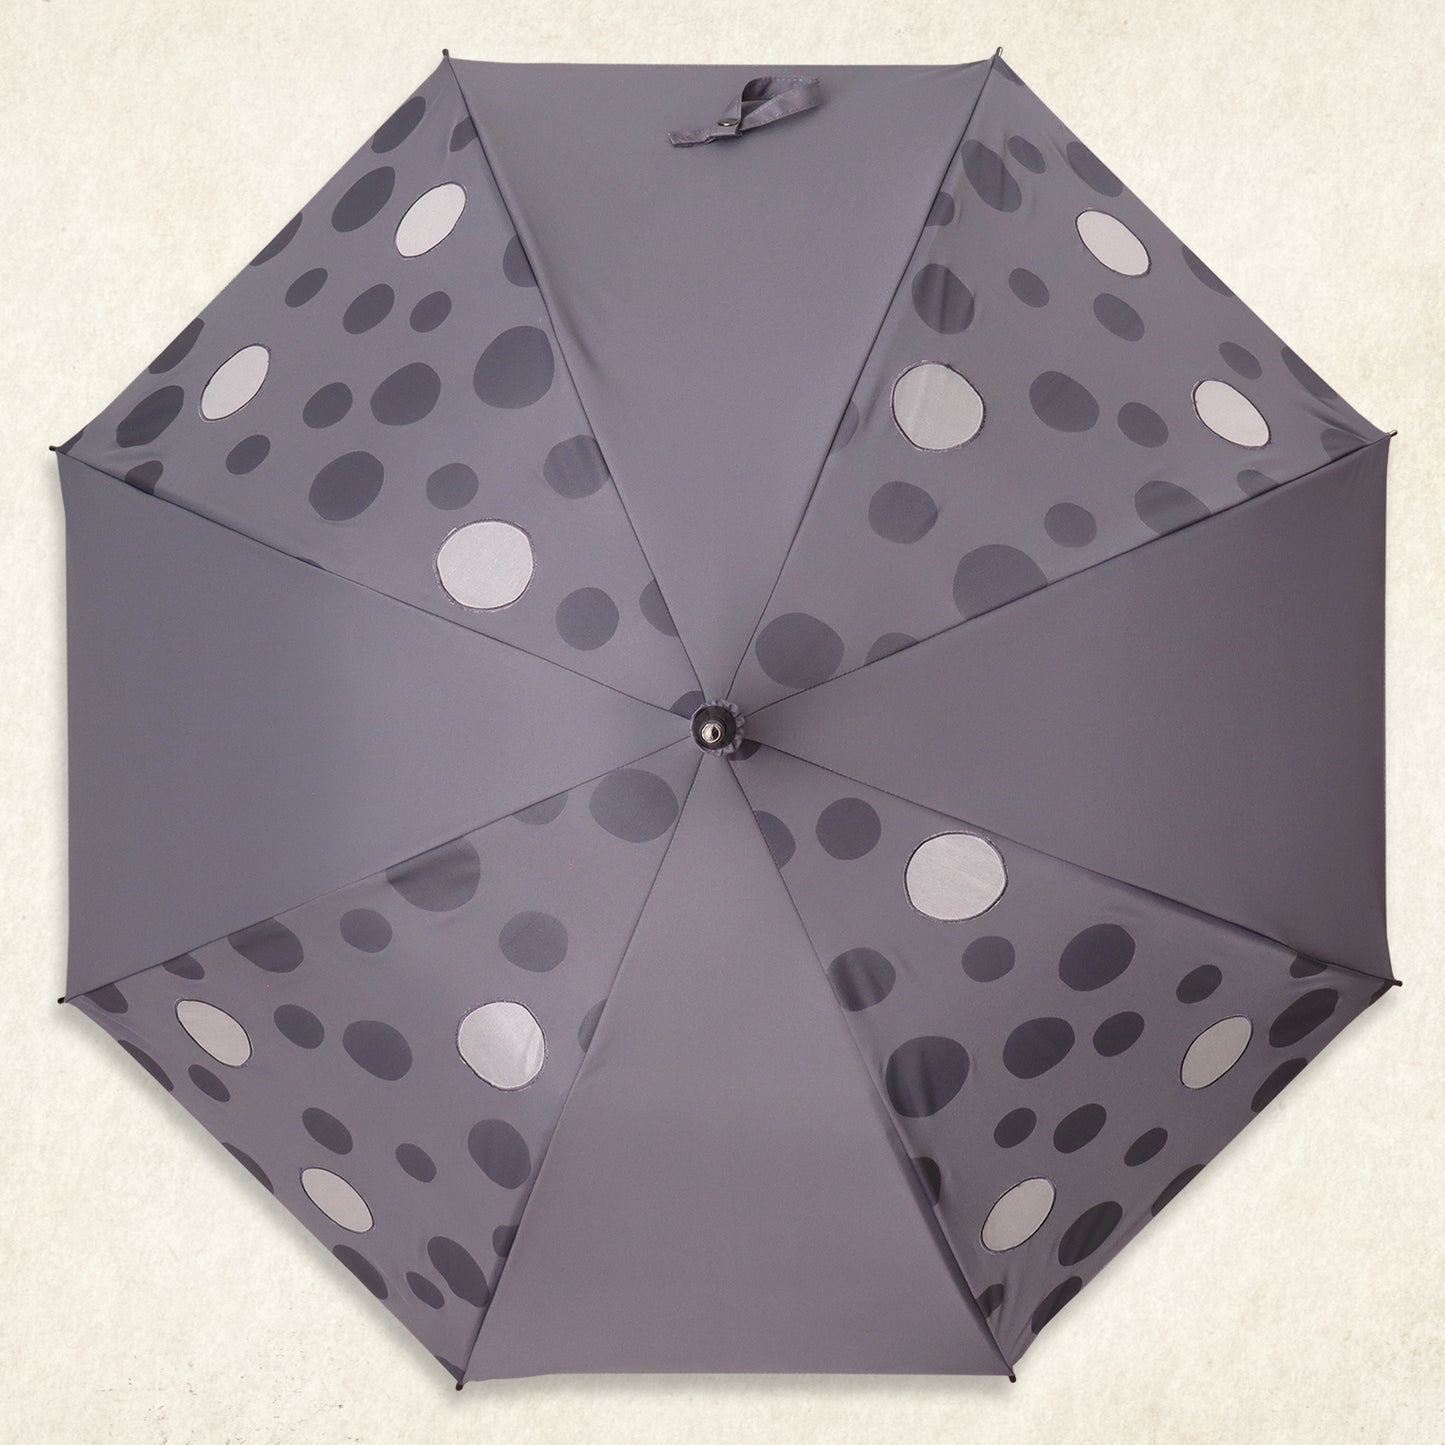 flotte-drop (フロット ドロップ) - 1級遮光 晴雨兼用 雨傘 UVカット ショート丈